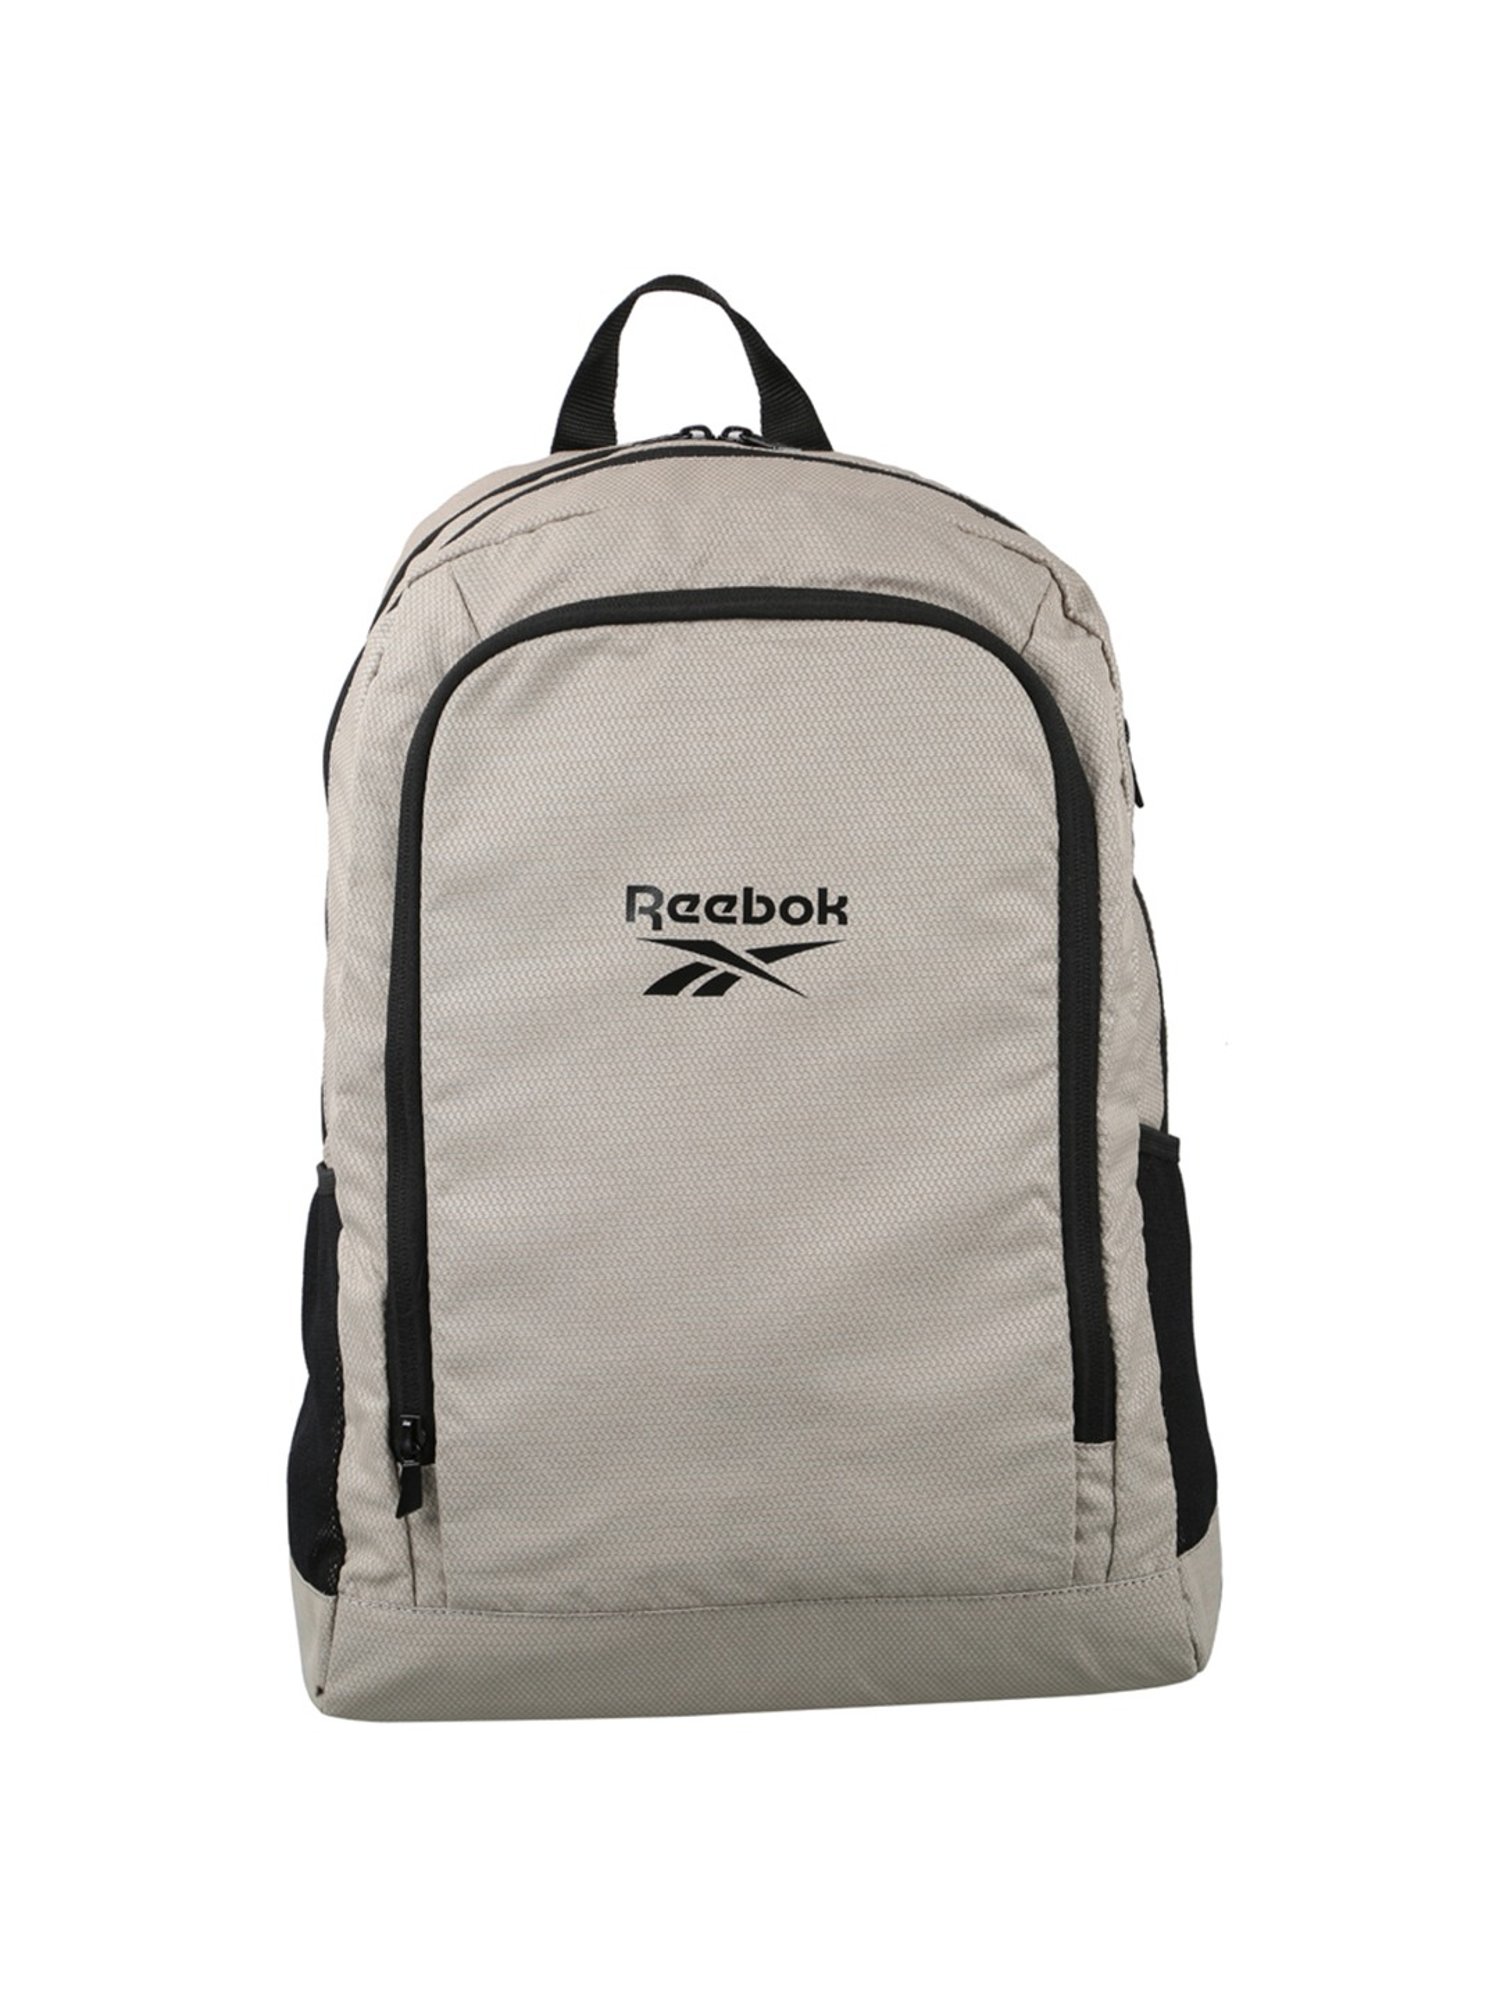 Reebok Backpack Ld99 | SportsDirect.com USA